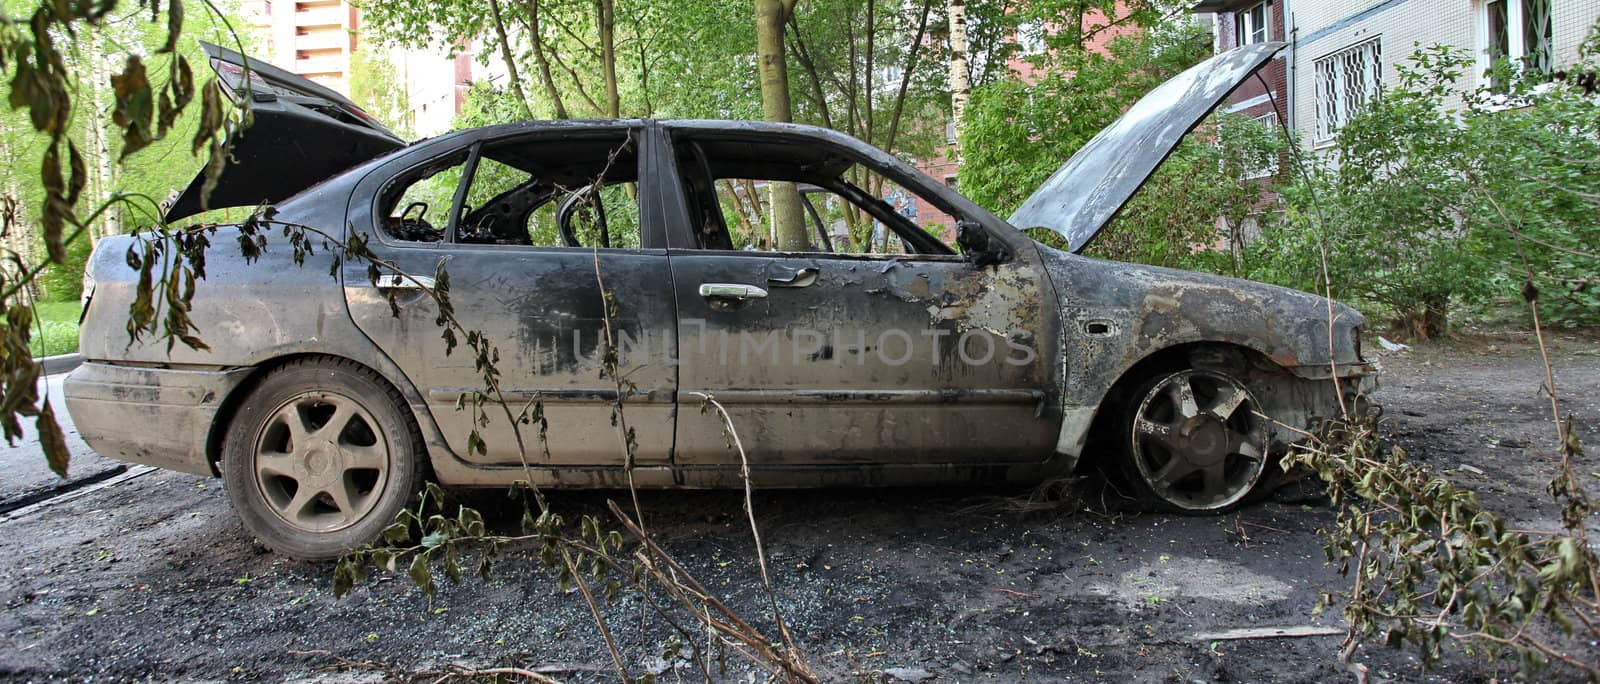 arson car by mrivserg